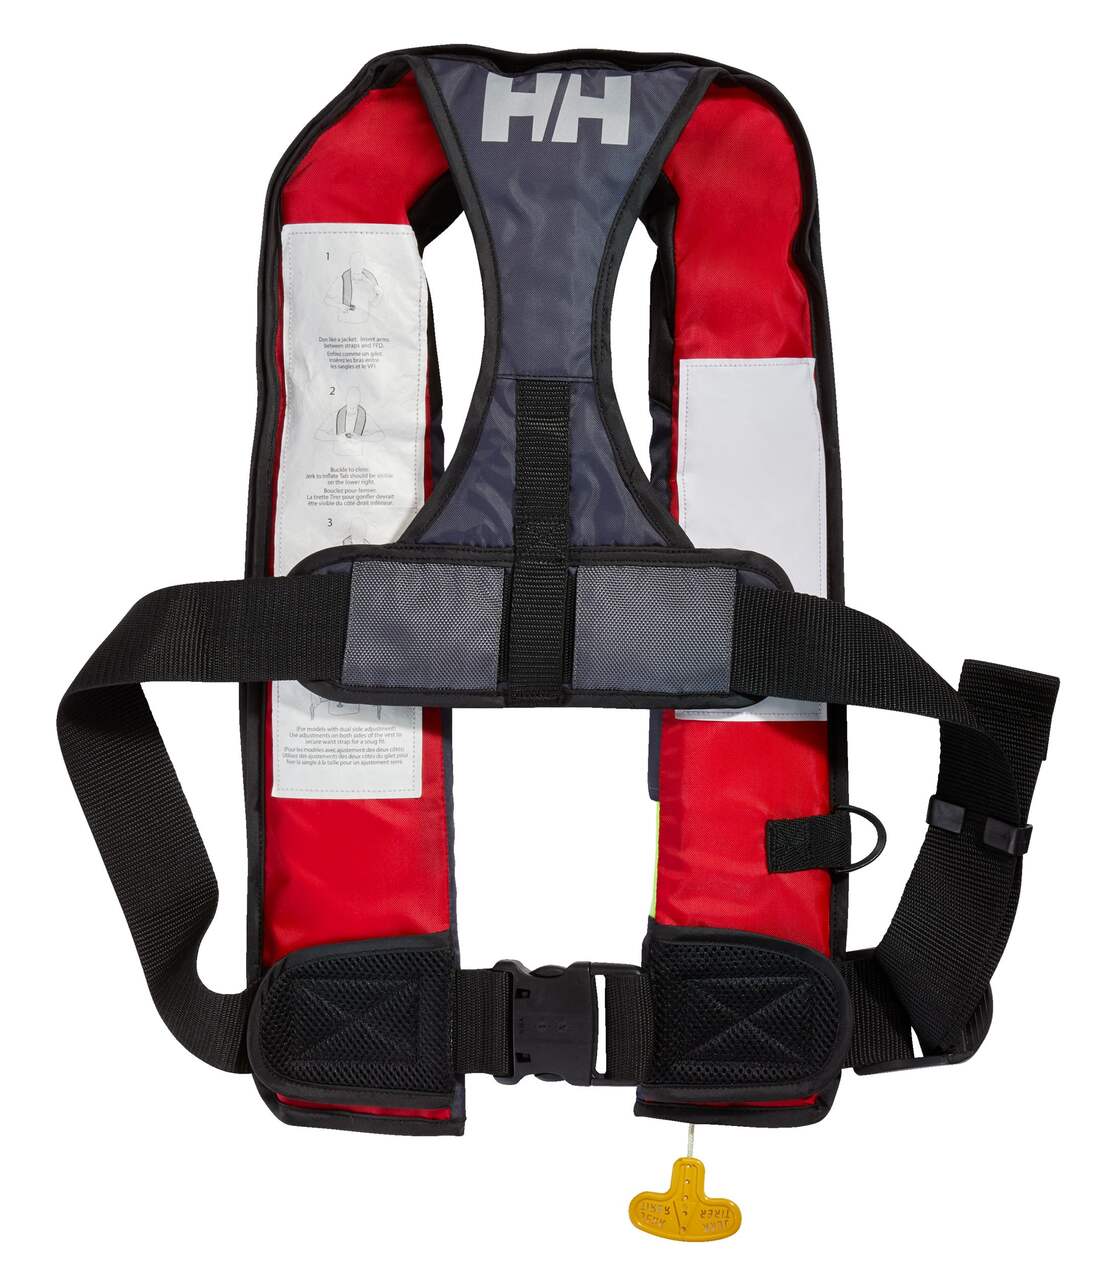 Stearns Comfort Fishing PFD/Paddling Vest